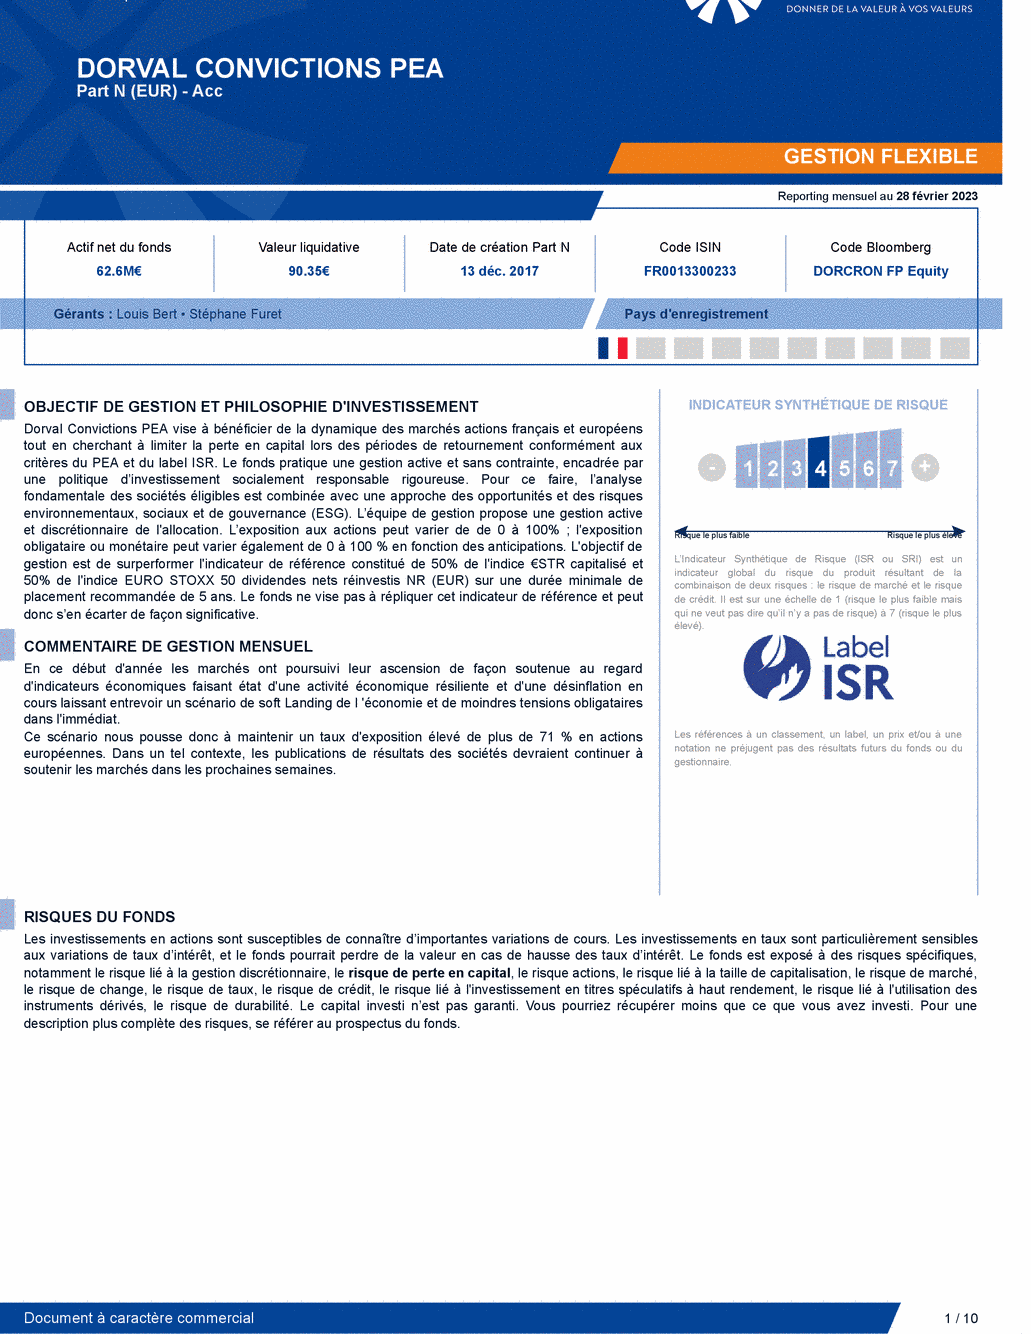 Reporting DORVAL CONVICTIONS PEA Part N - 28/02/2023 - Français